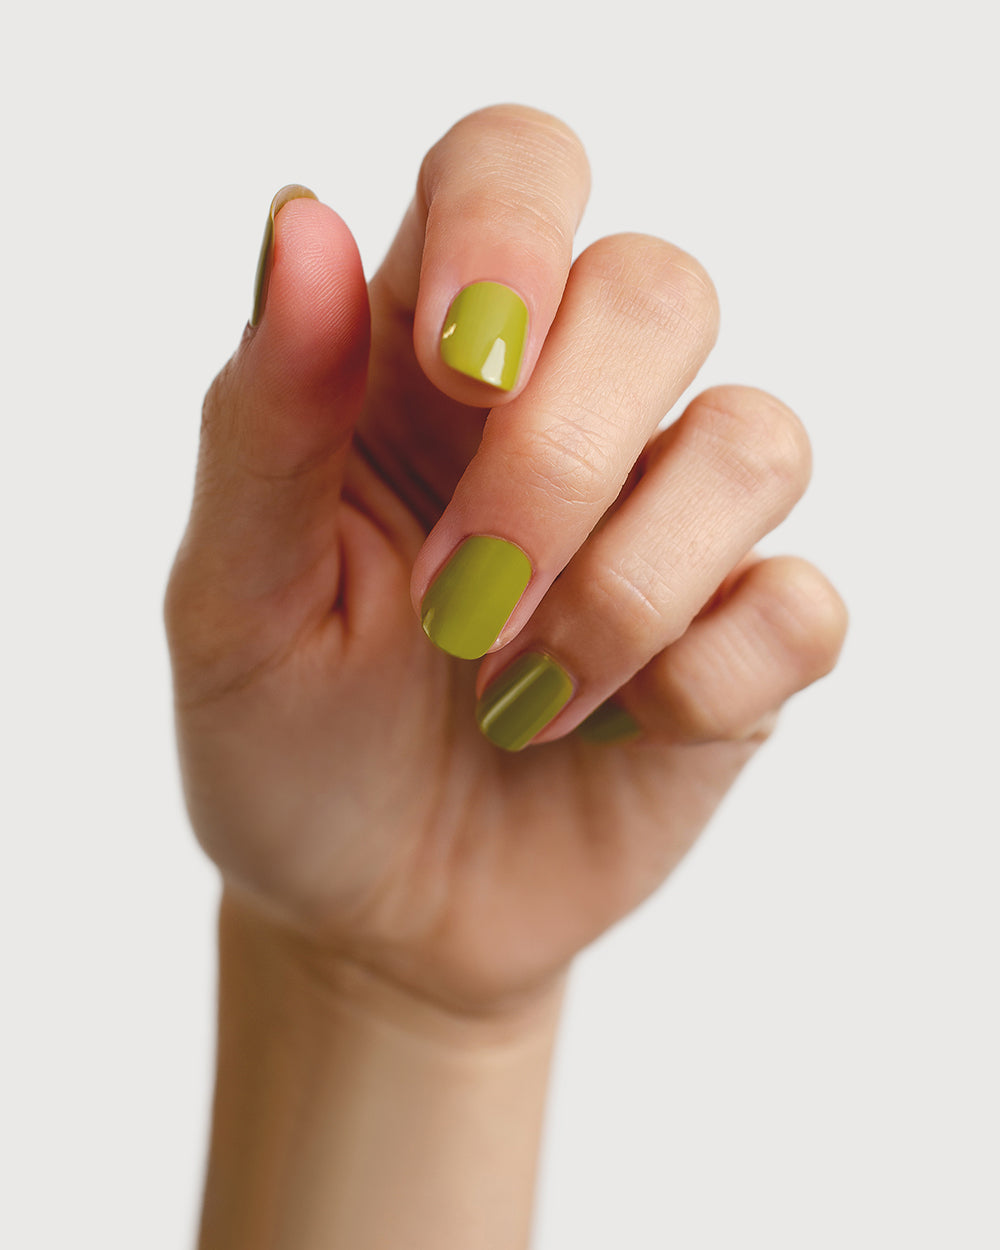 Avocado green nail polish hand swatch on fair skin tone